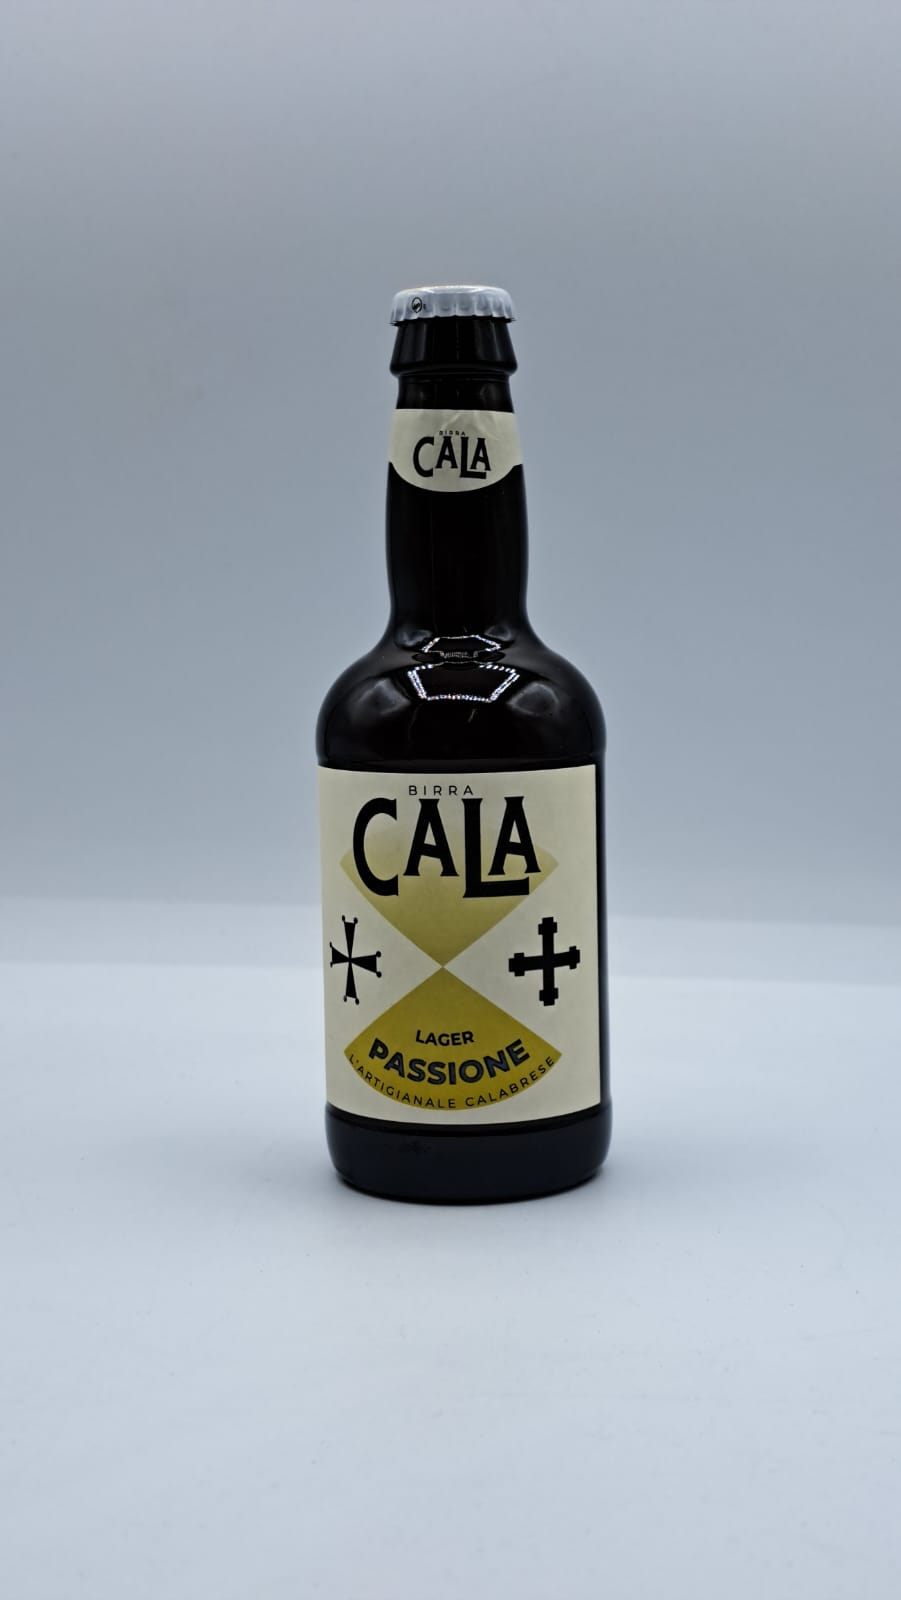 Birra-cala-lager-Passione